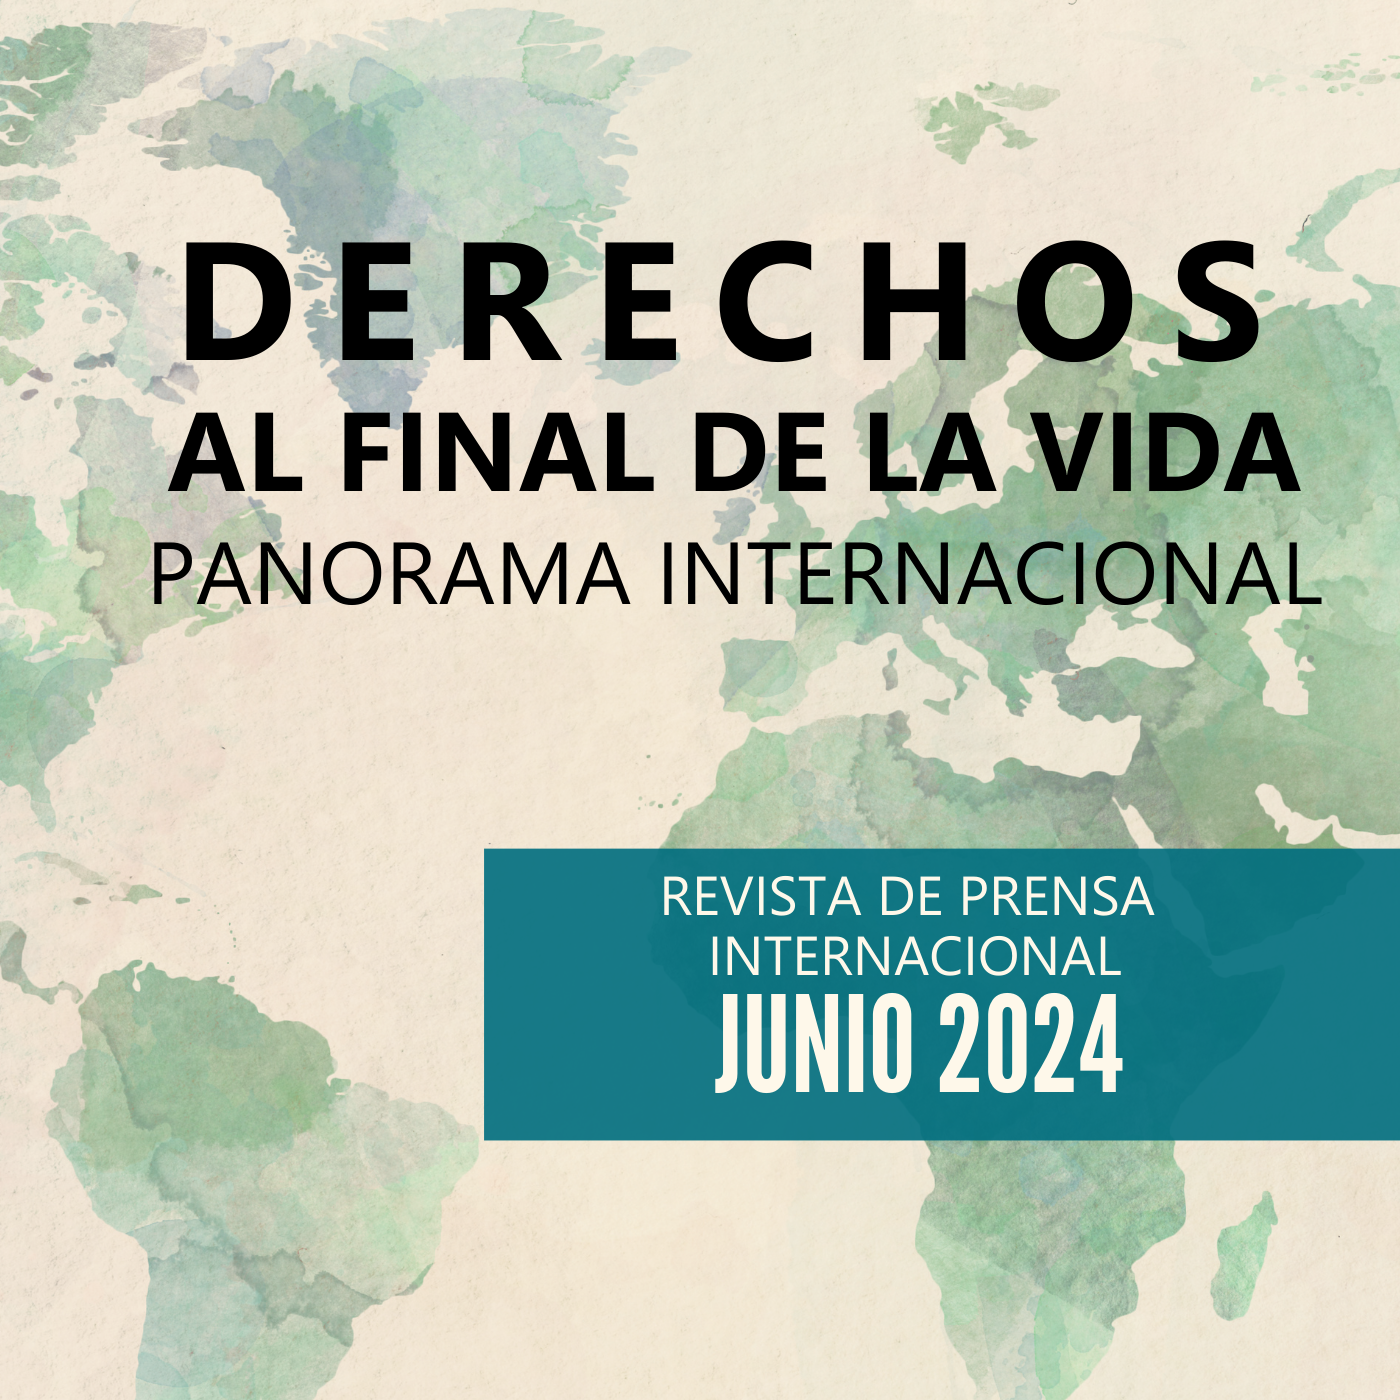 Featured image for “Revista de prensa internacional de junio de 2024”